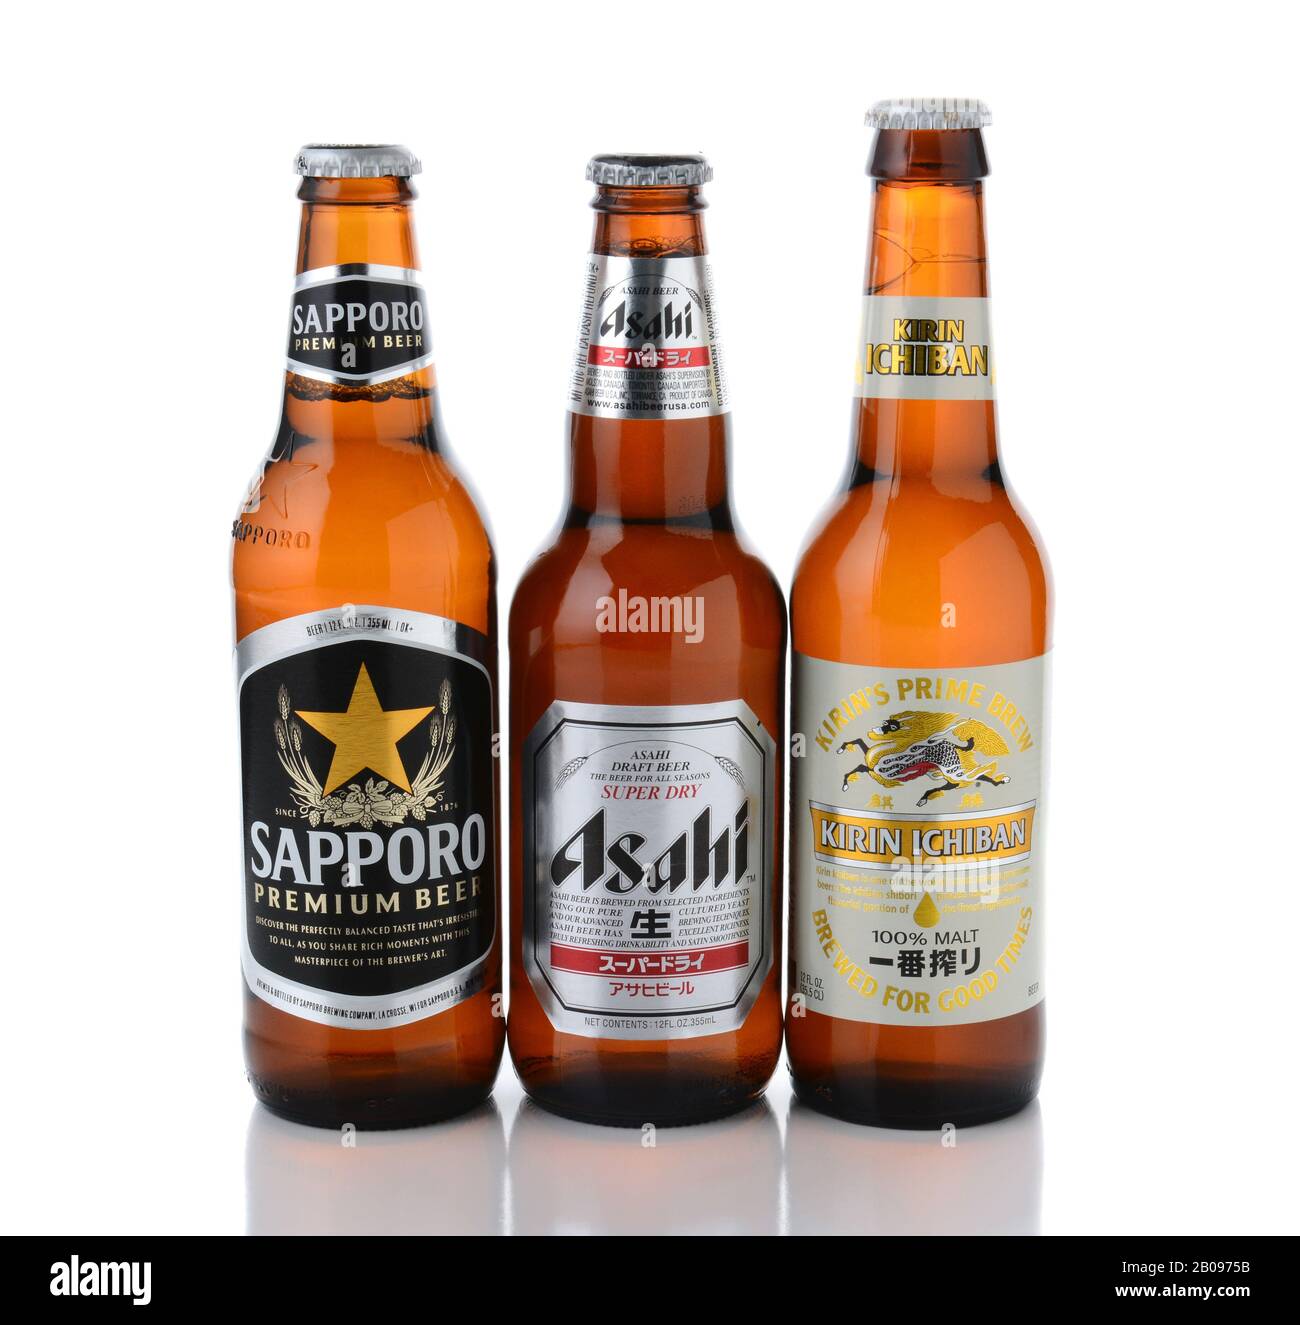 IRVINE, CA - JANUARY, 11, 2015: Three bottles of Japanese beers. Sapporo, Asahi and Kirin Ichiban are three of the most popular Japanese beers importe Stock Photo